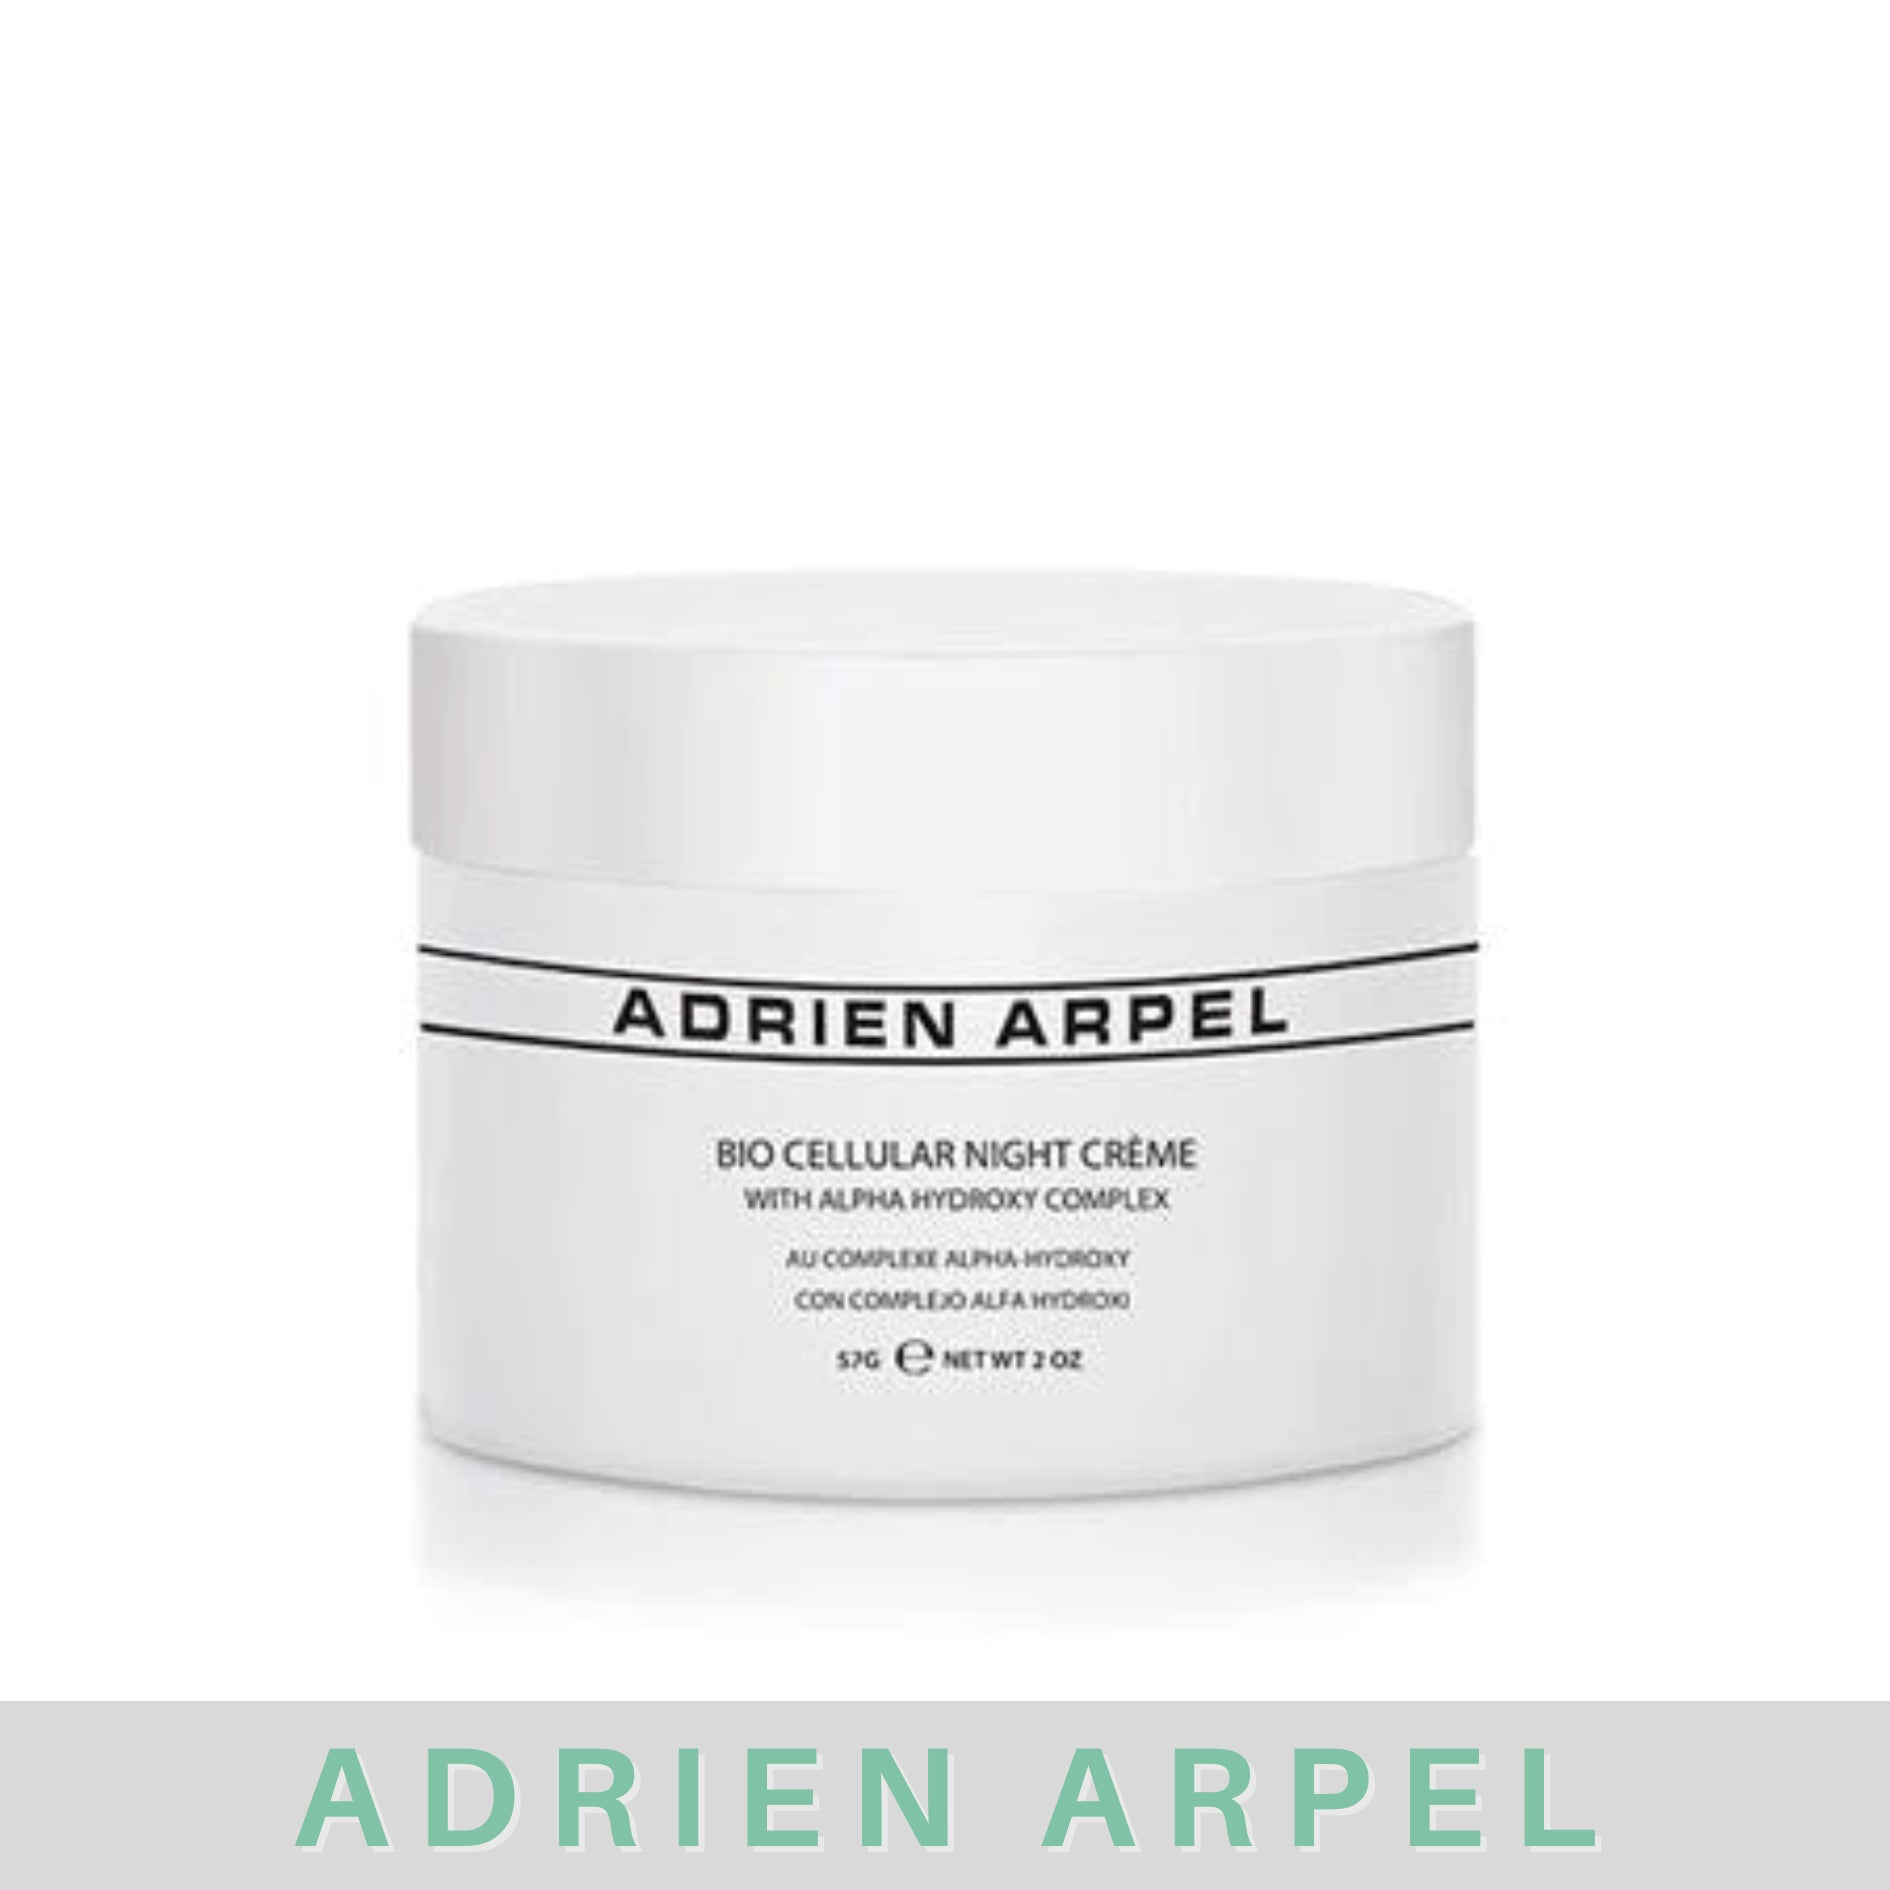 Adrien Arpel Bio Cellular Night Creme, Goodies N Stuff